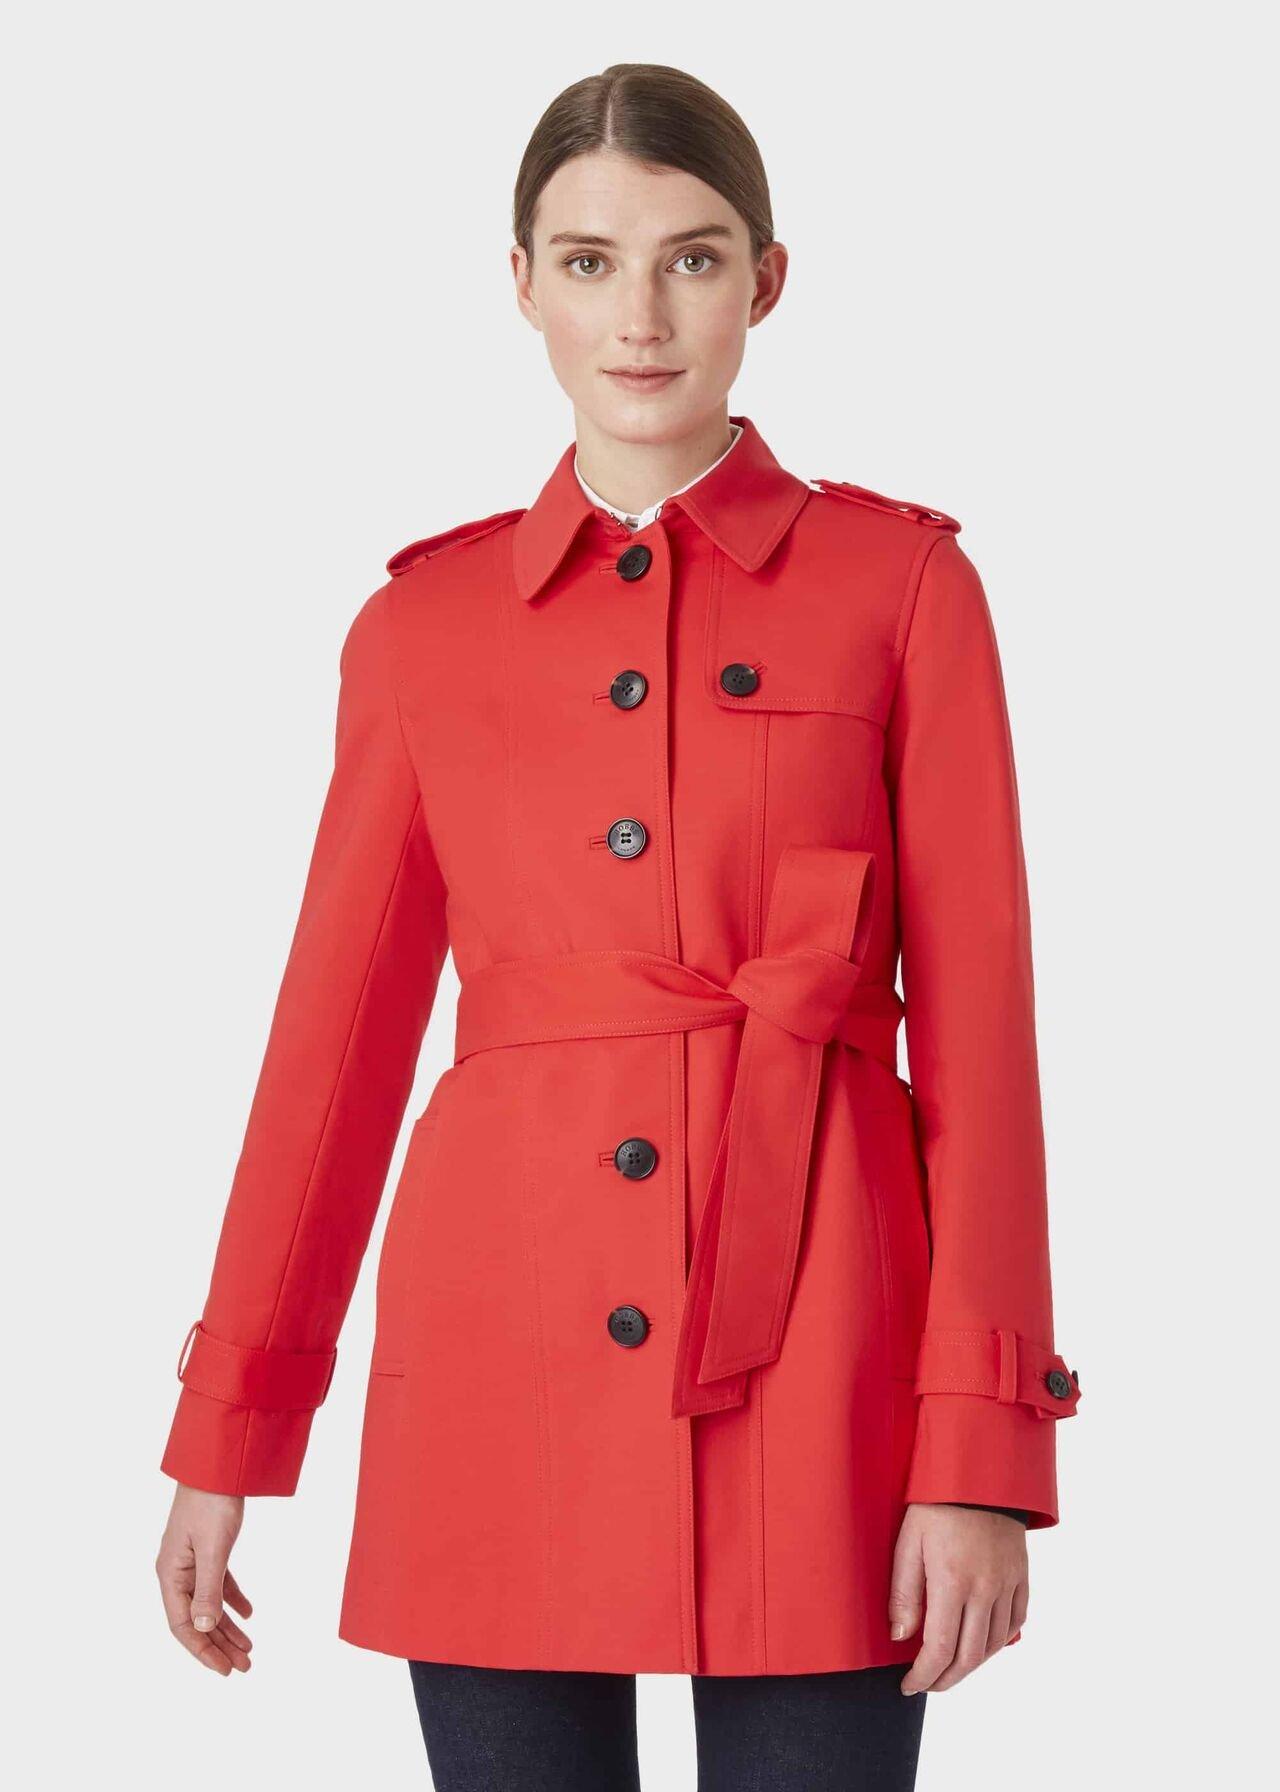 Hobbs Cotton Ella Trench Coat in Red - Lyst